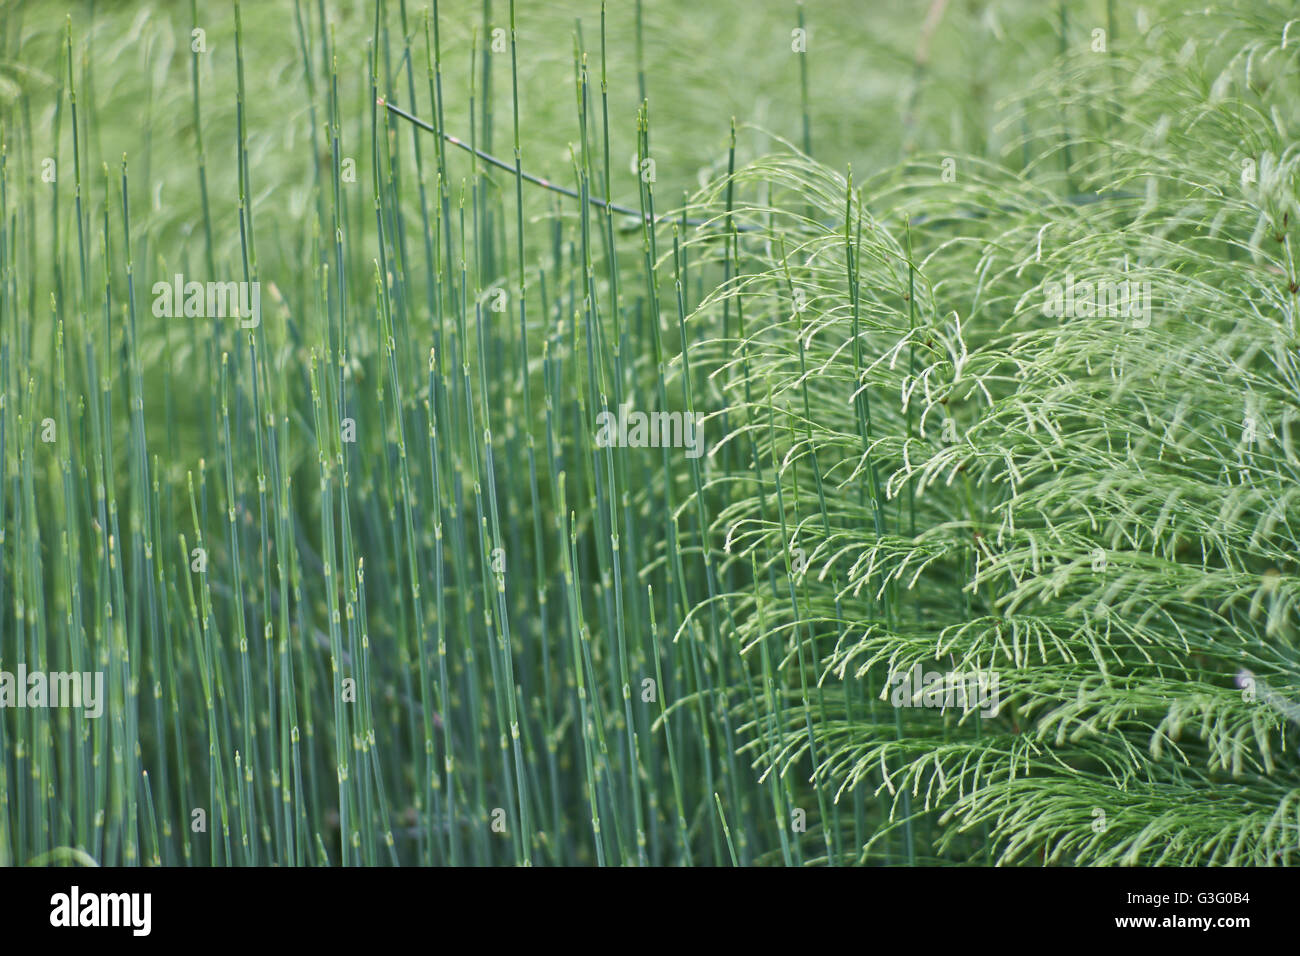 Equisetum horsetail snake grass puzzlegrass stems Stock Photo